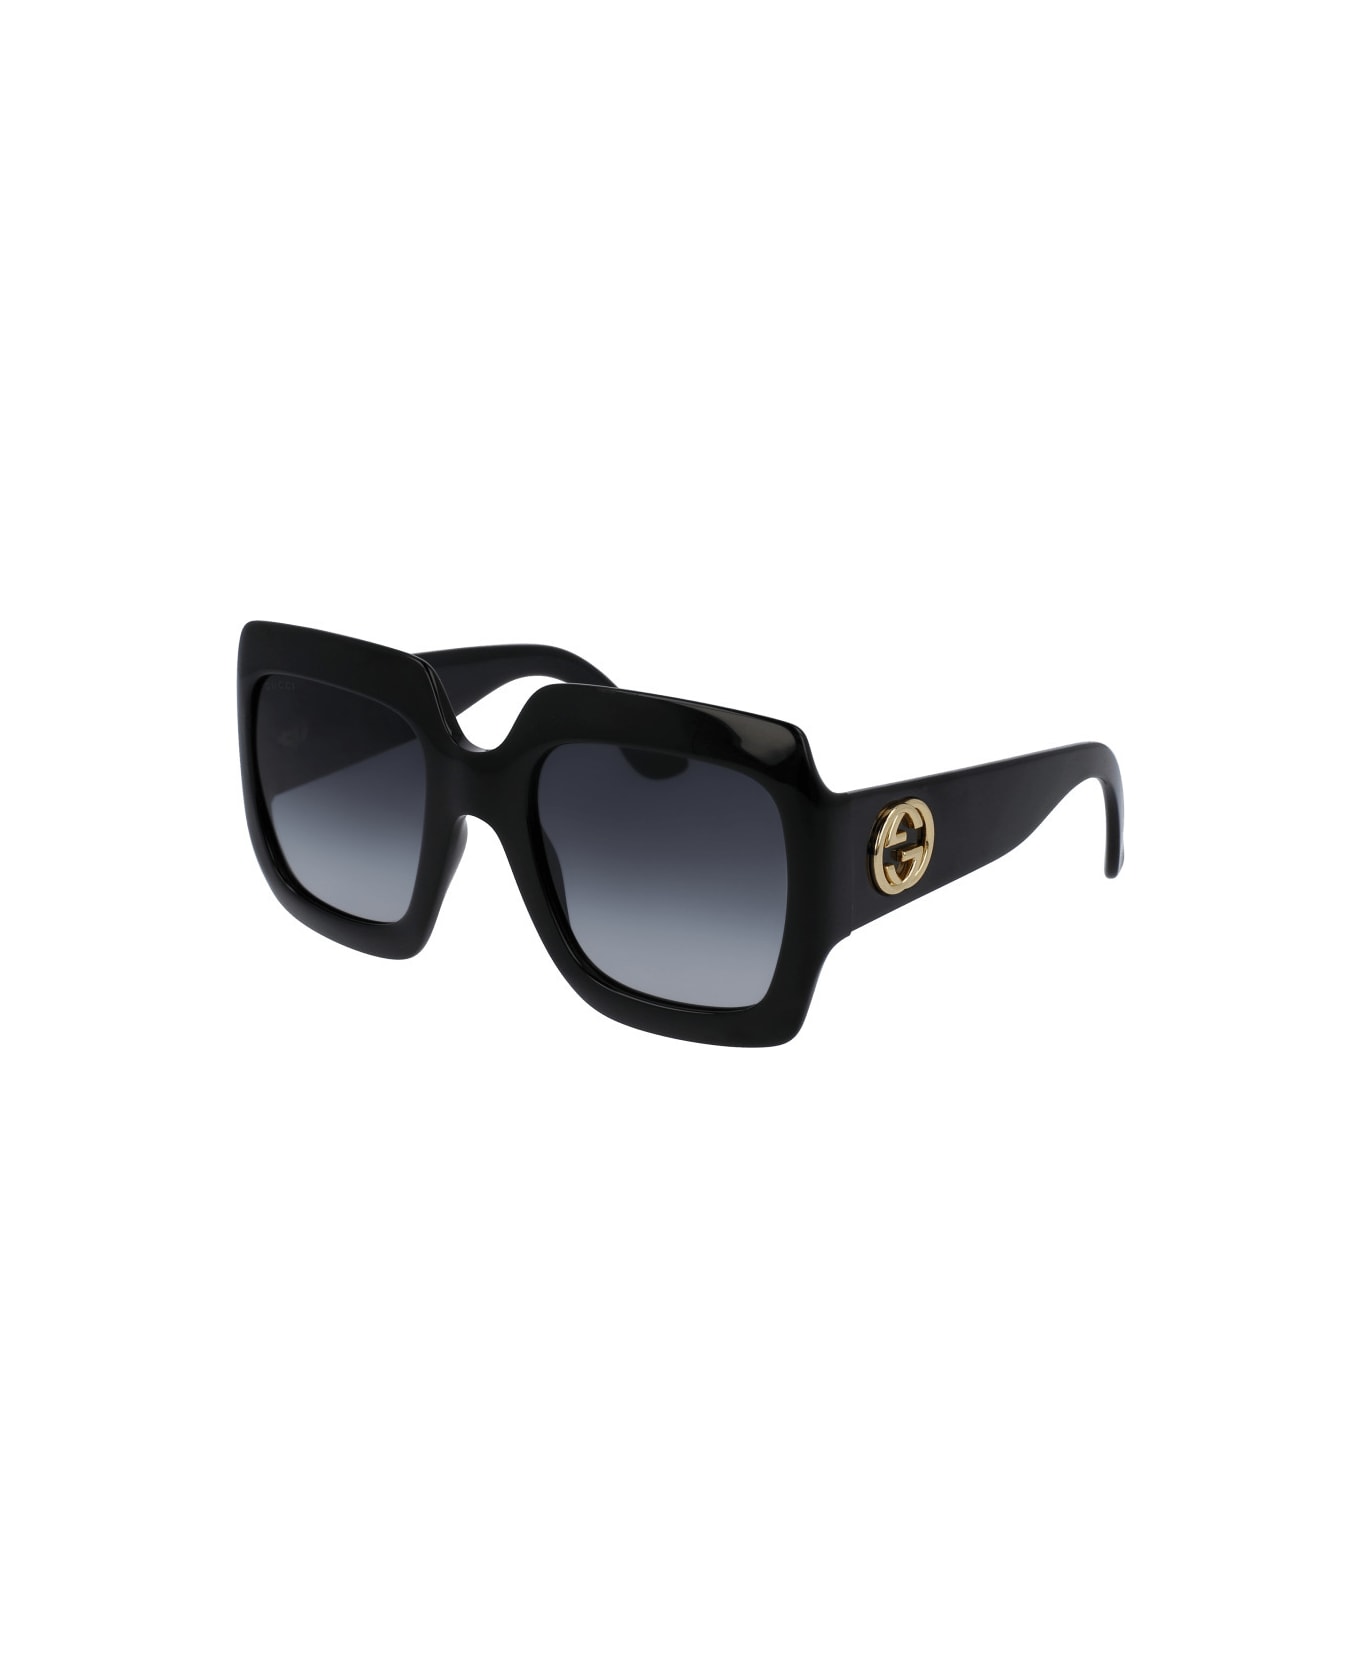 Gucci Eyewear GG0053SN 001 Sunglasses - Black